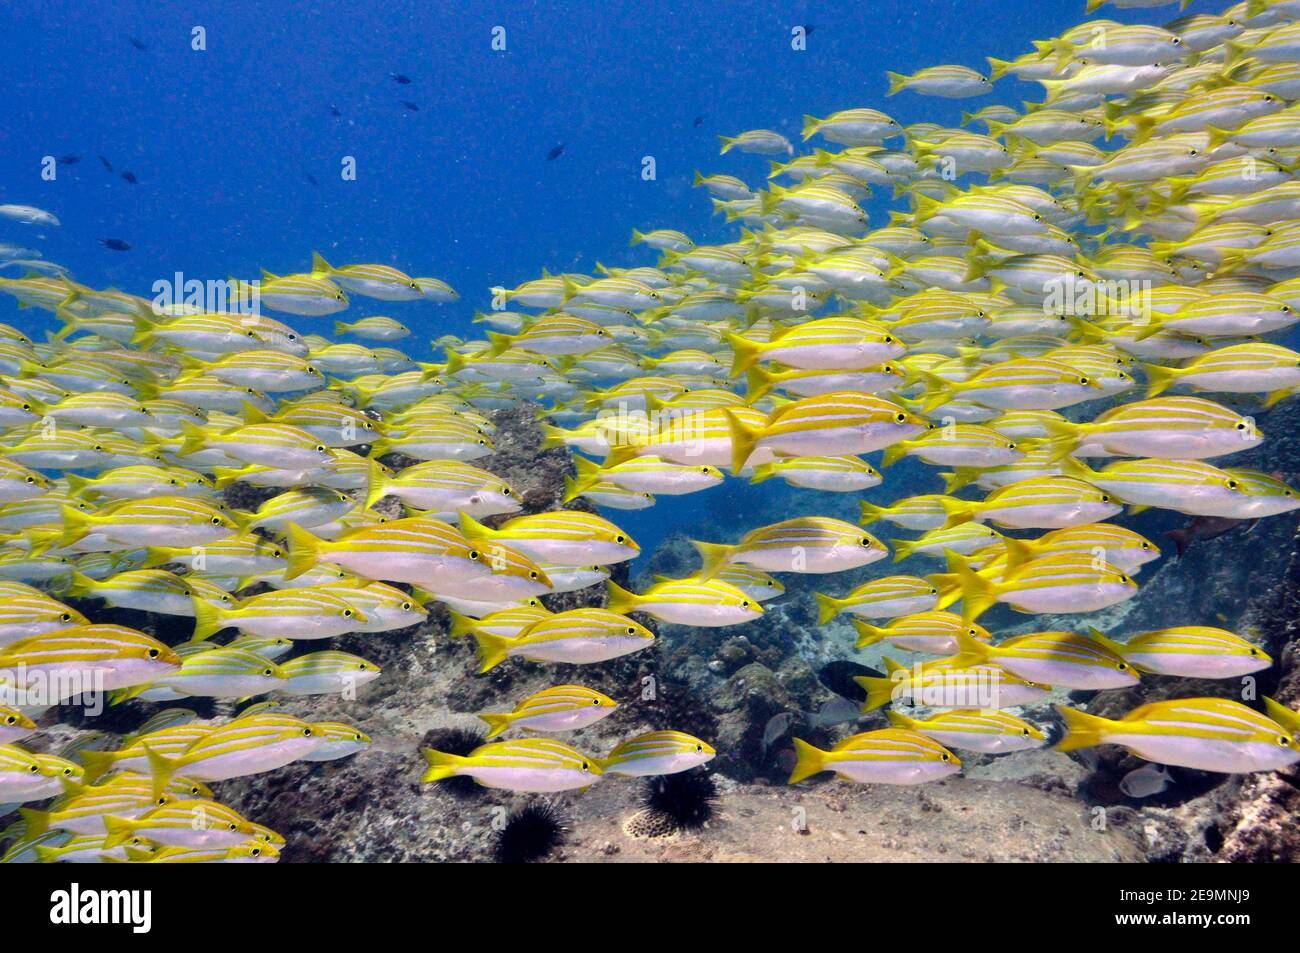 School of tropical fish Seychelles Bengal Snapper (Lutjanus bengalensis) Stock Photo